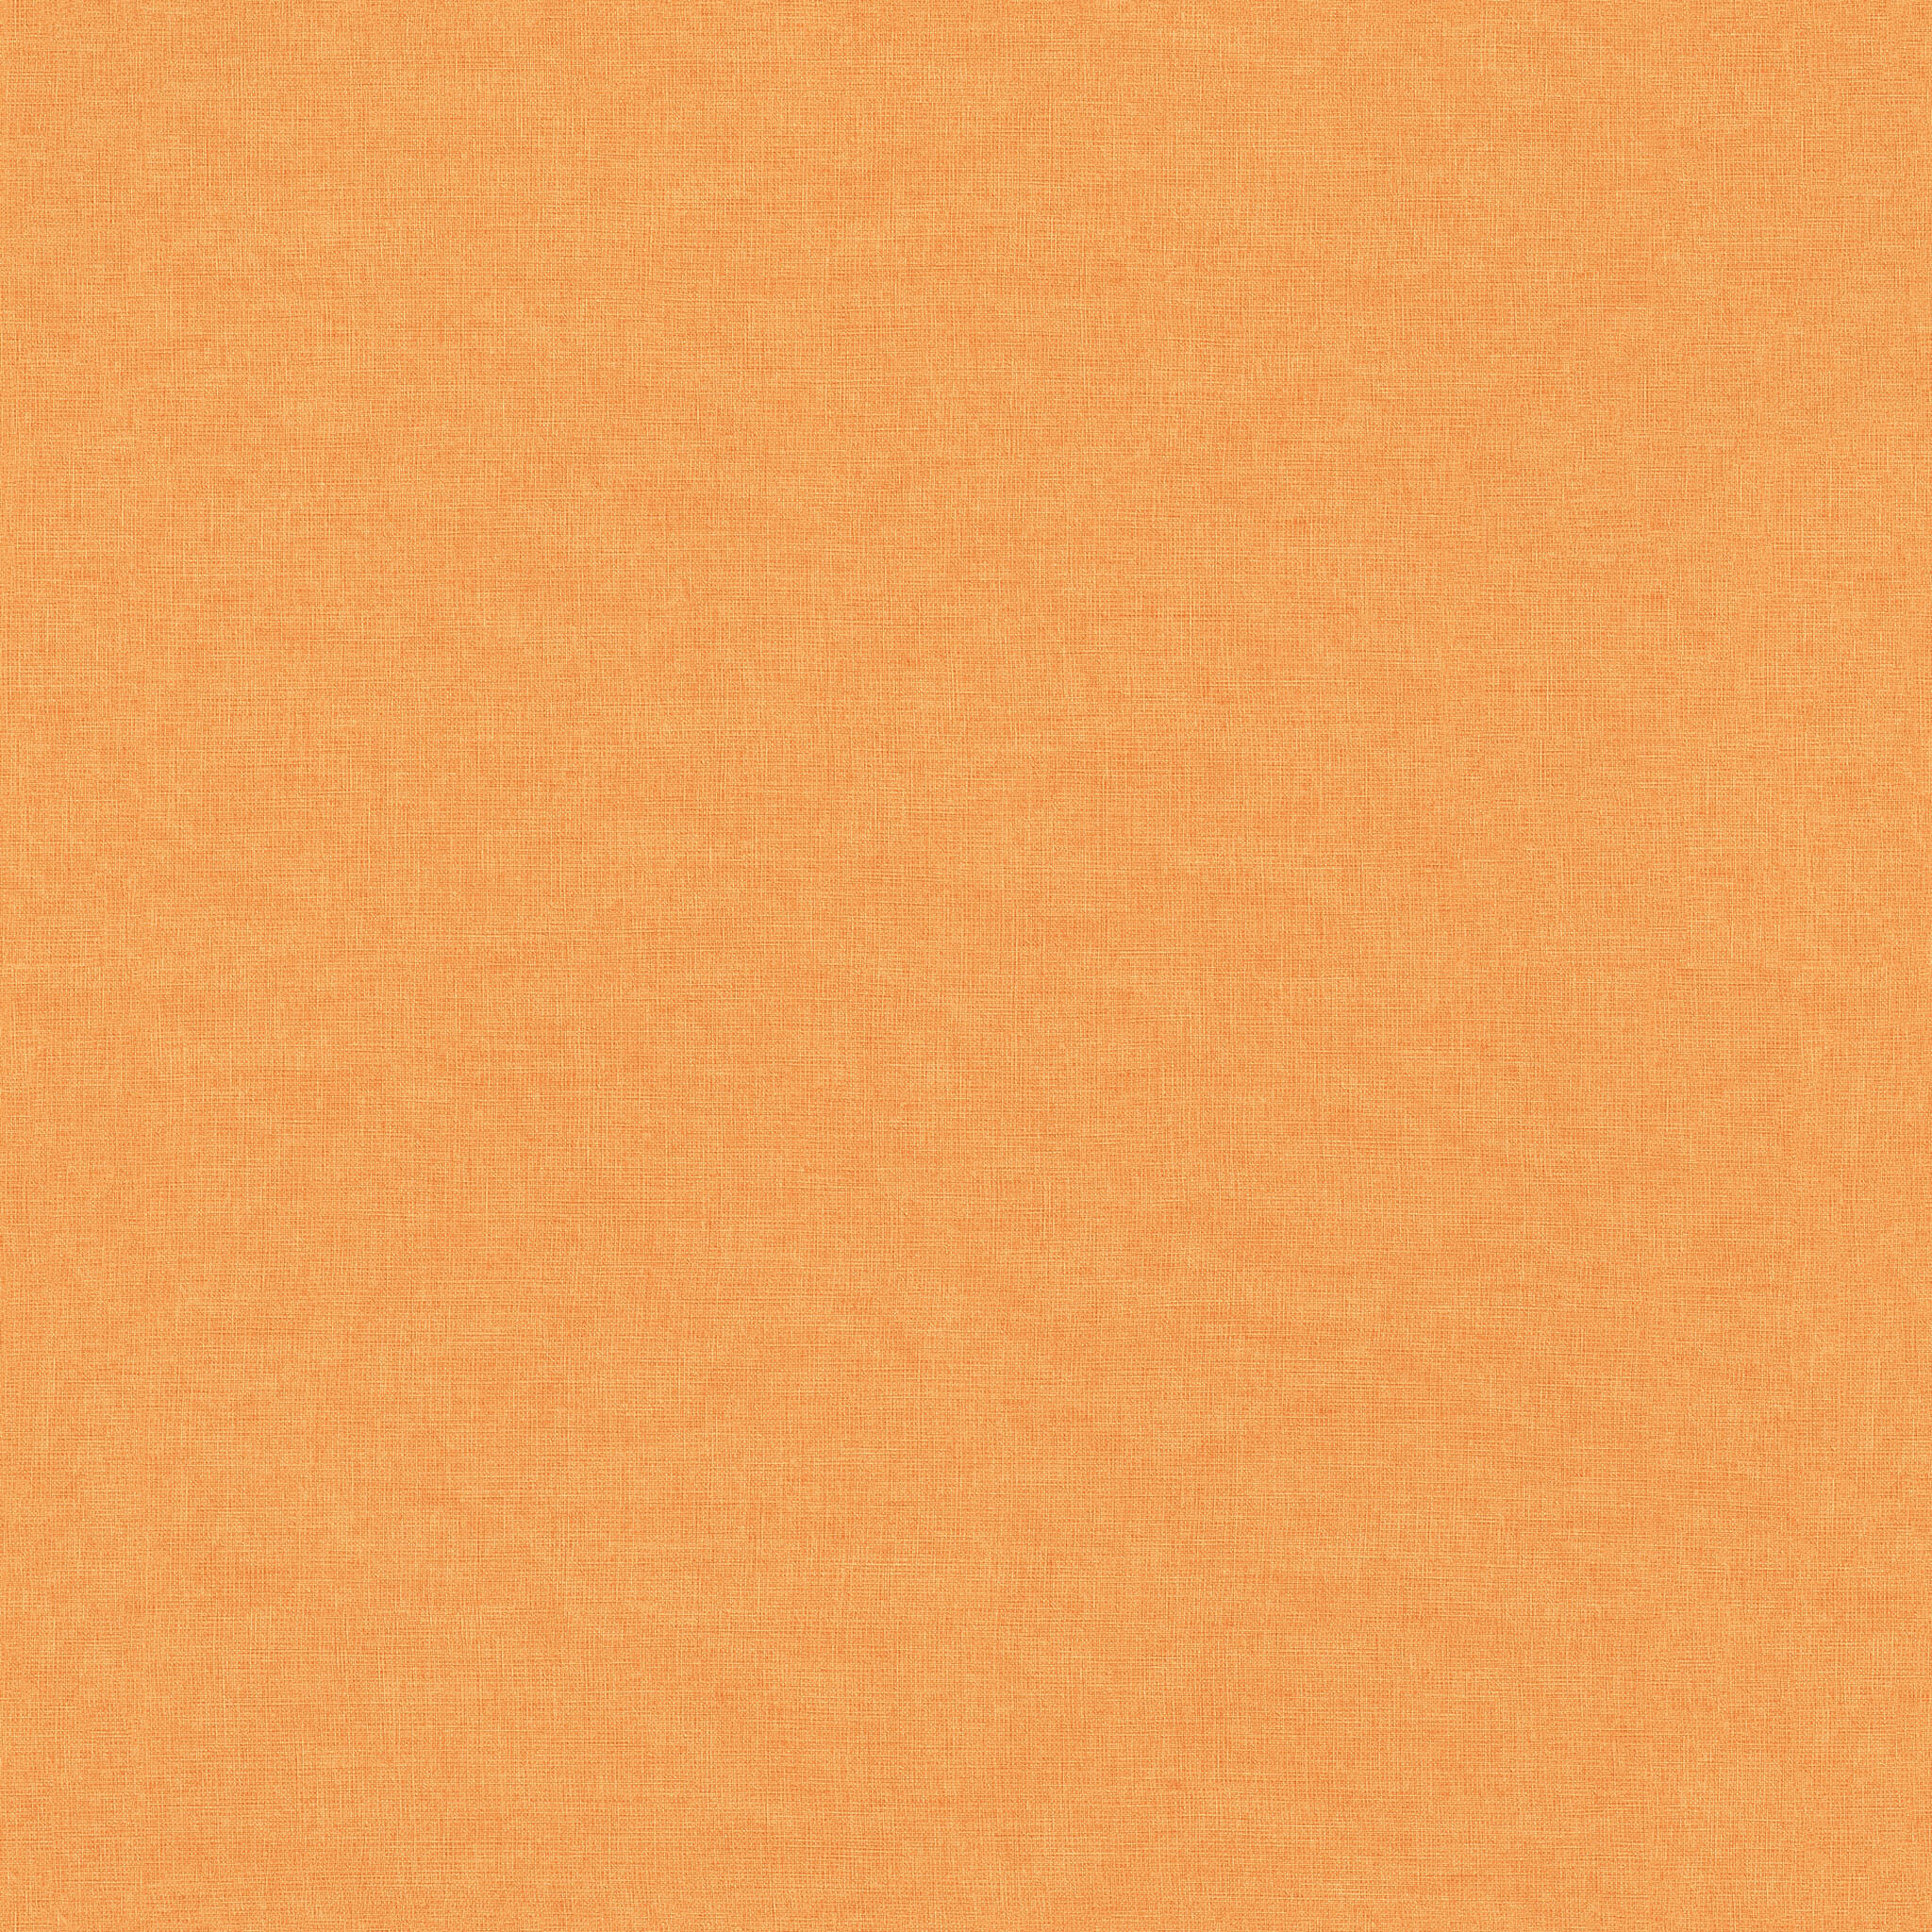 Textilstruktur Vliestapete in Orange-Gelborange Selection 464085